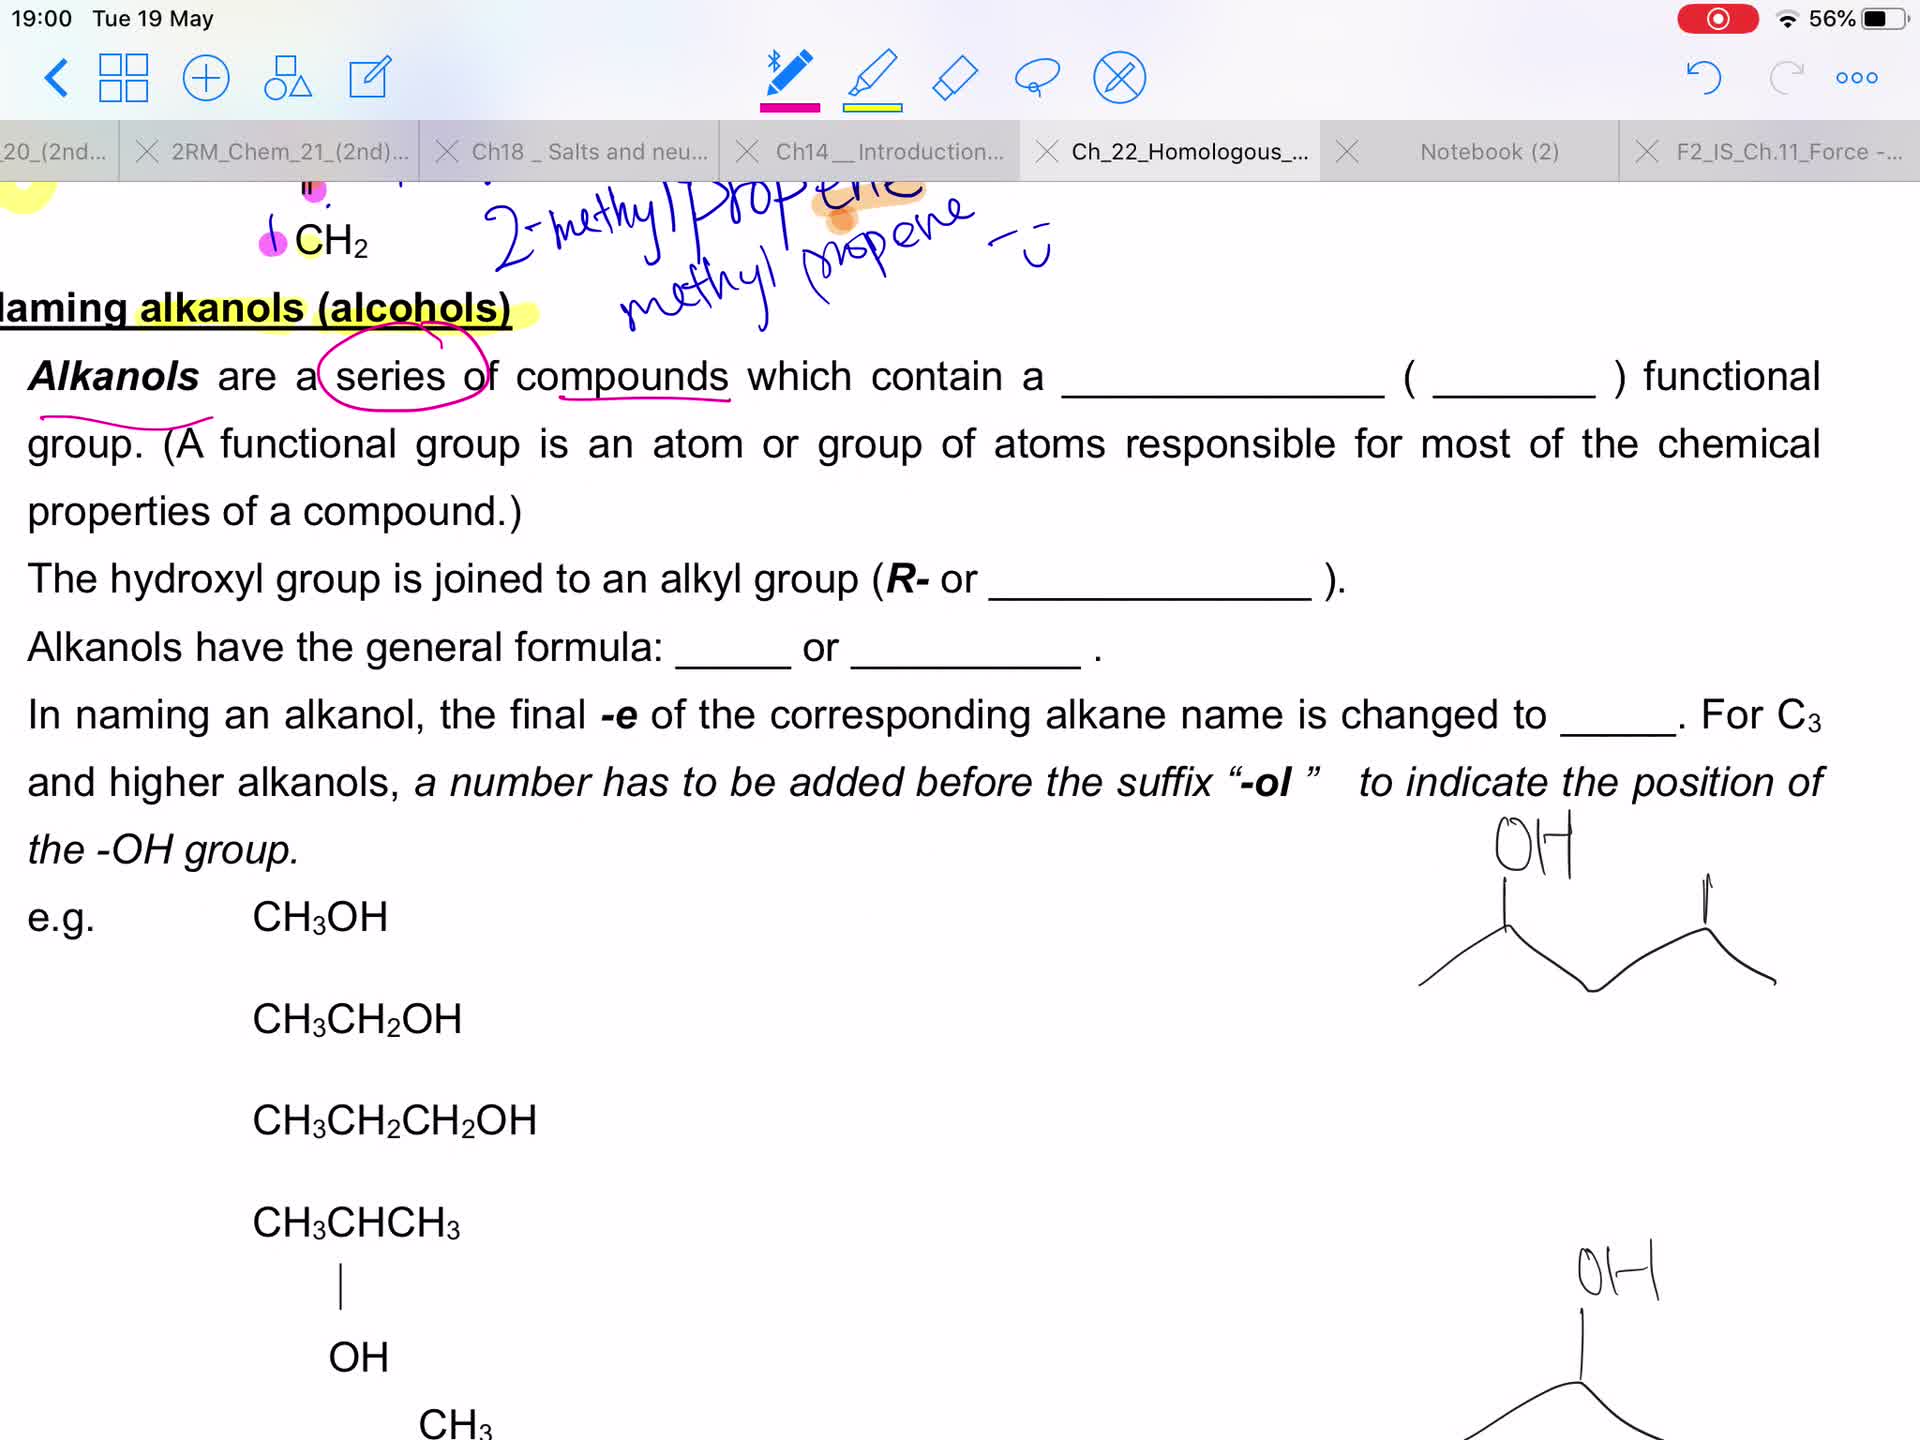 20200520 F4 Chem Online class 46